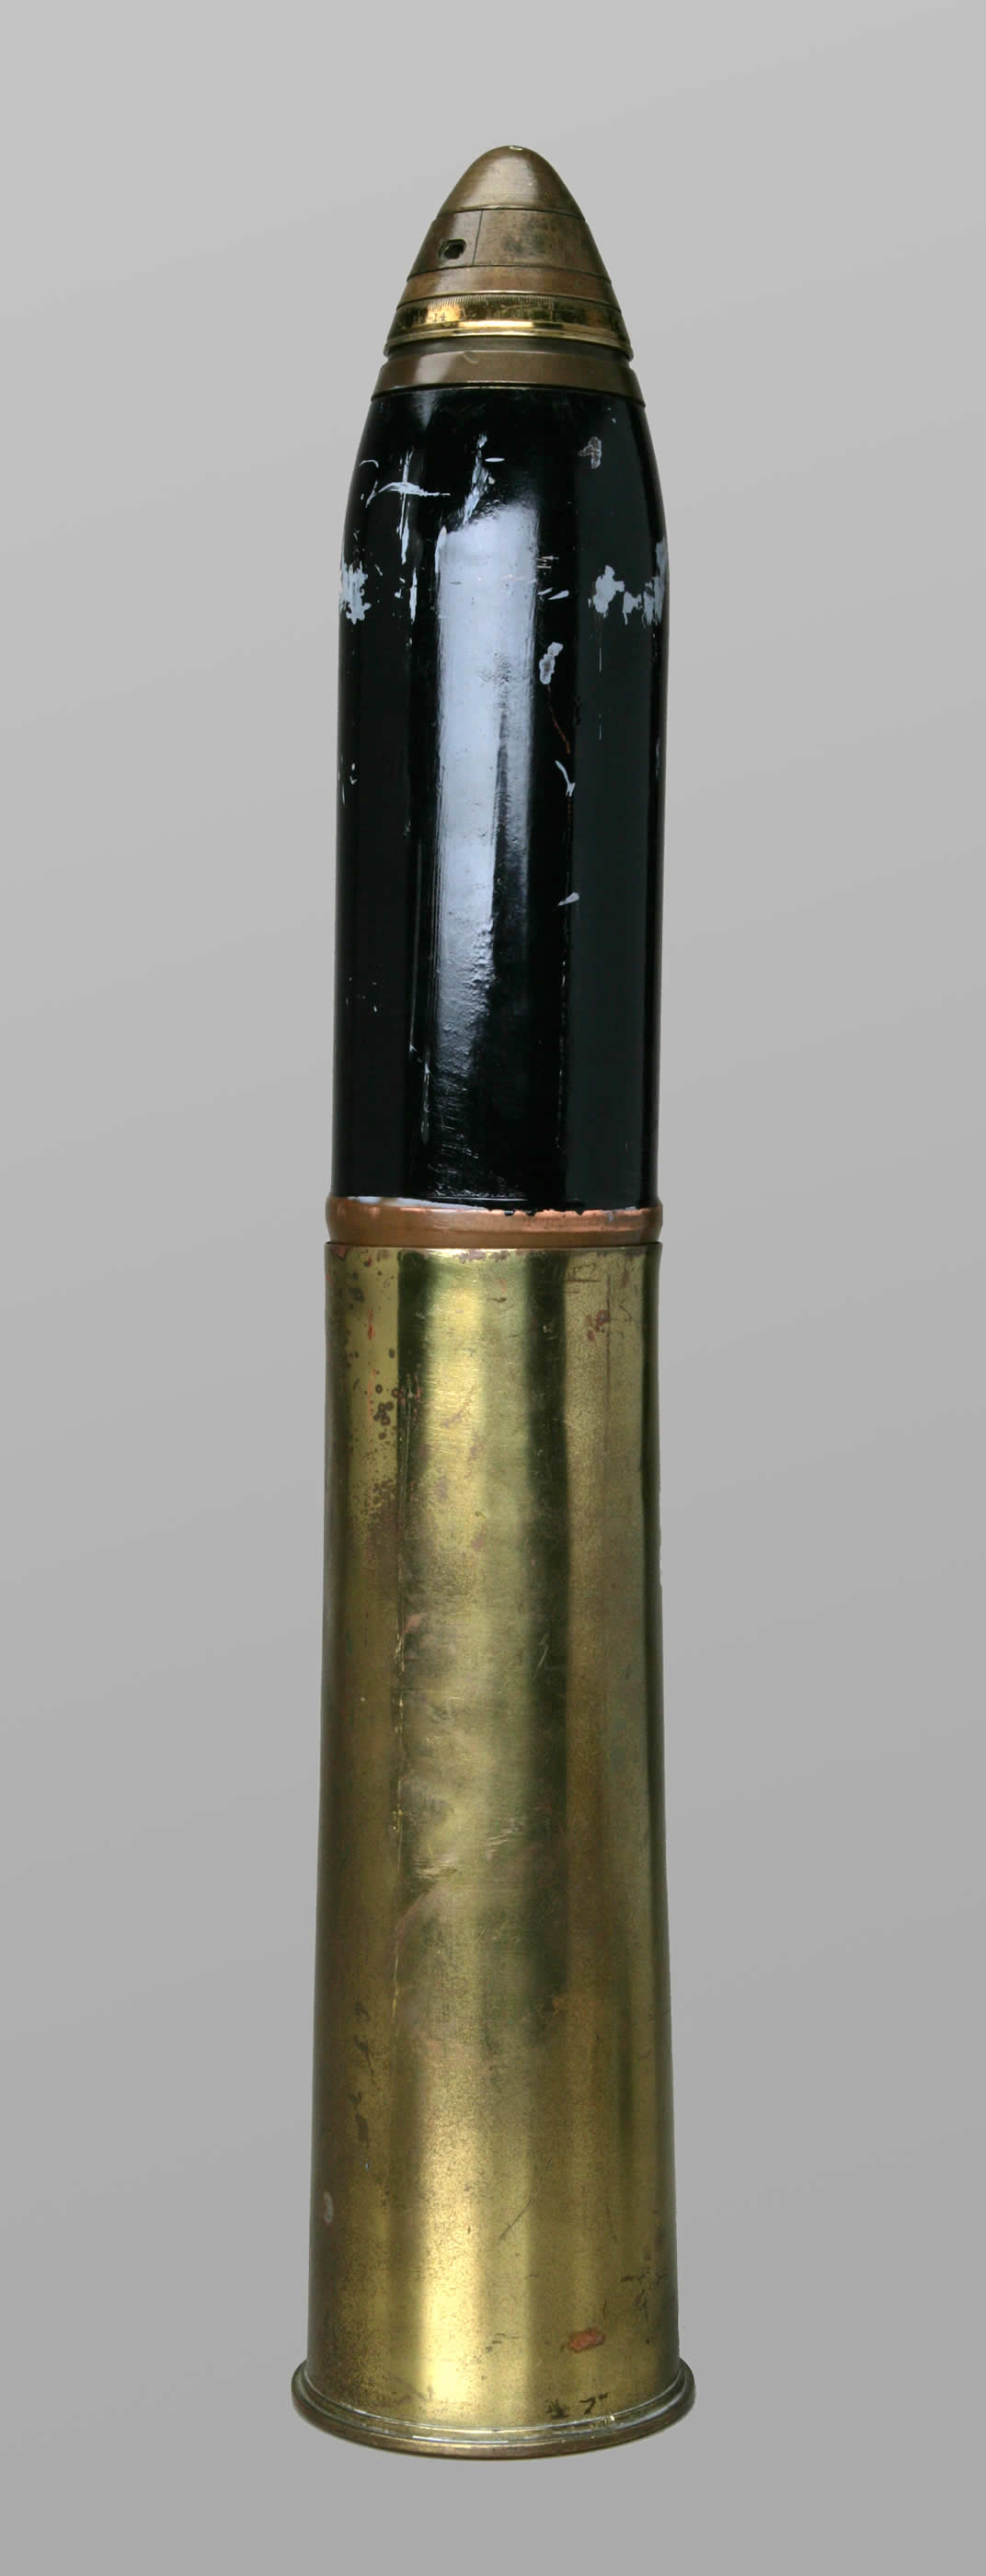 Artillery and Grenades - 18-pounder Artillery Shell